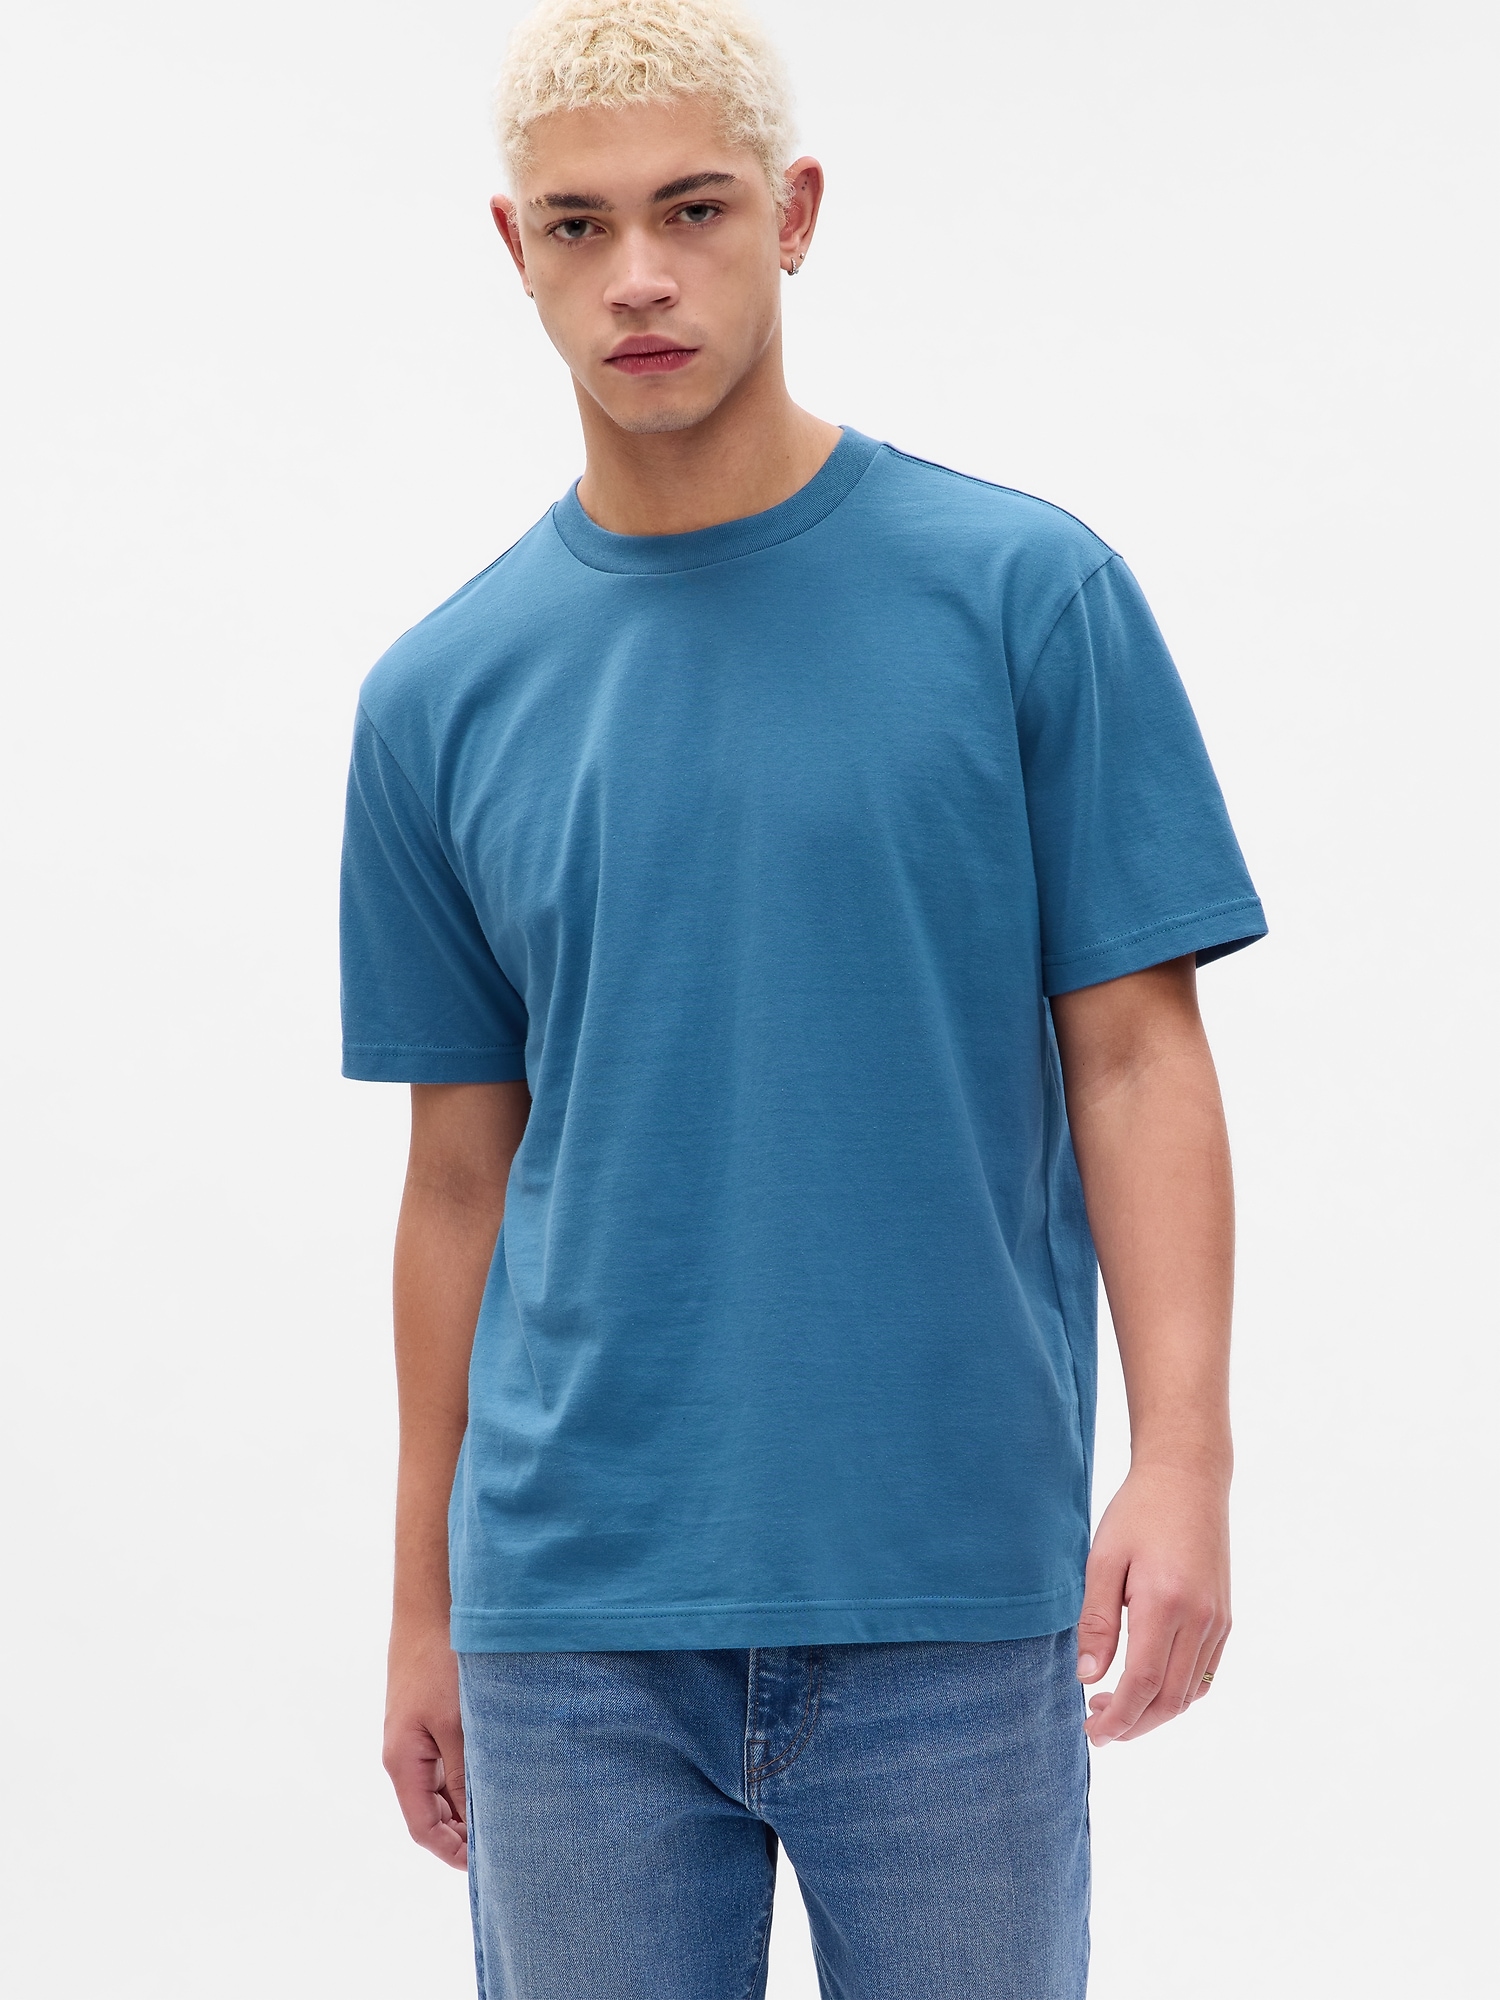 Original T-Shirt | Gap